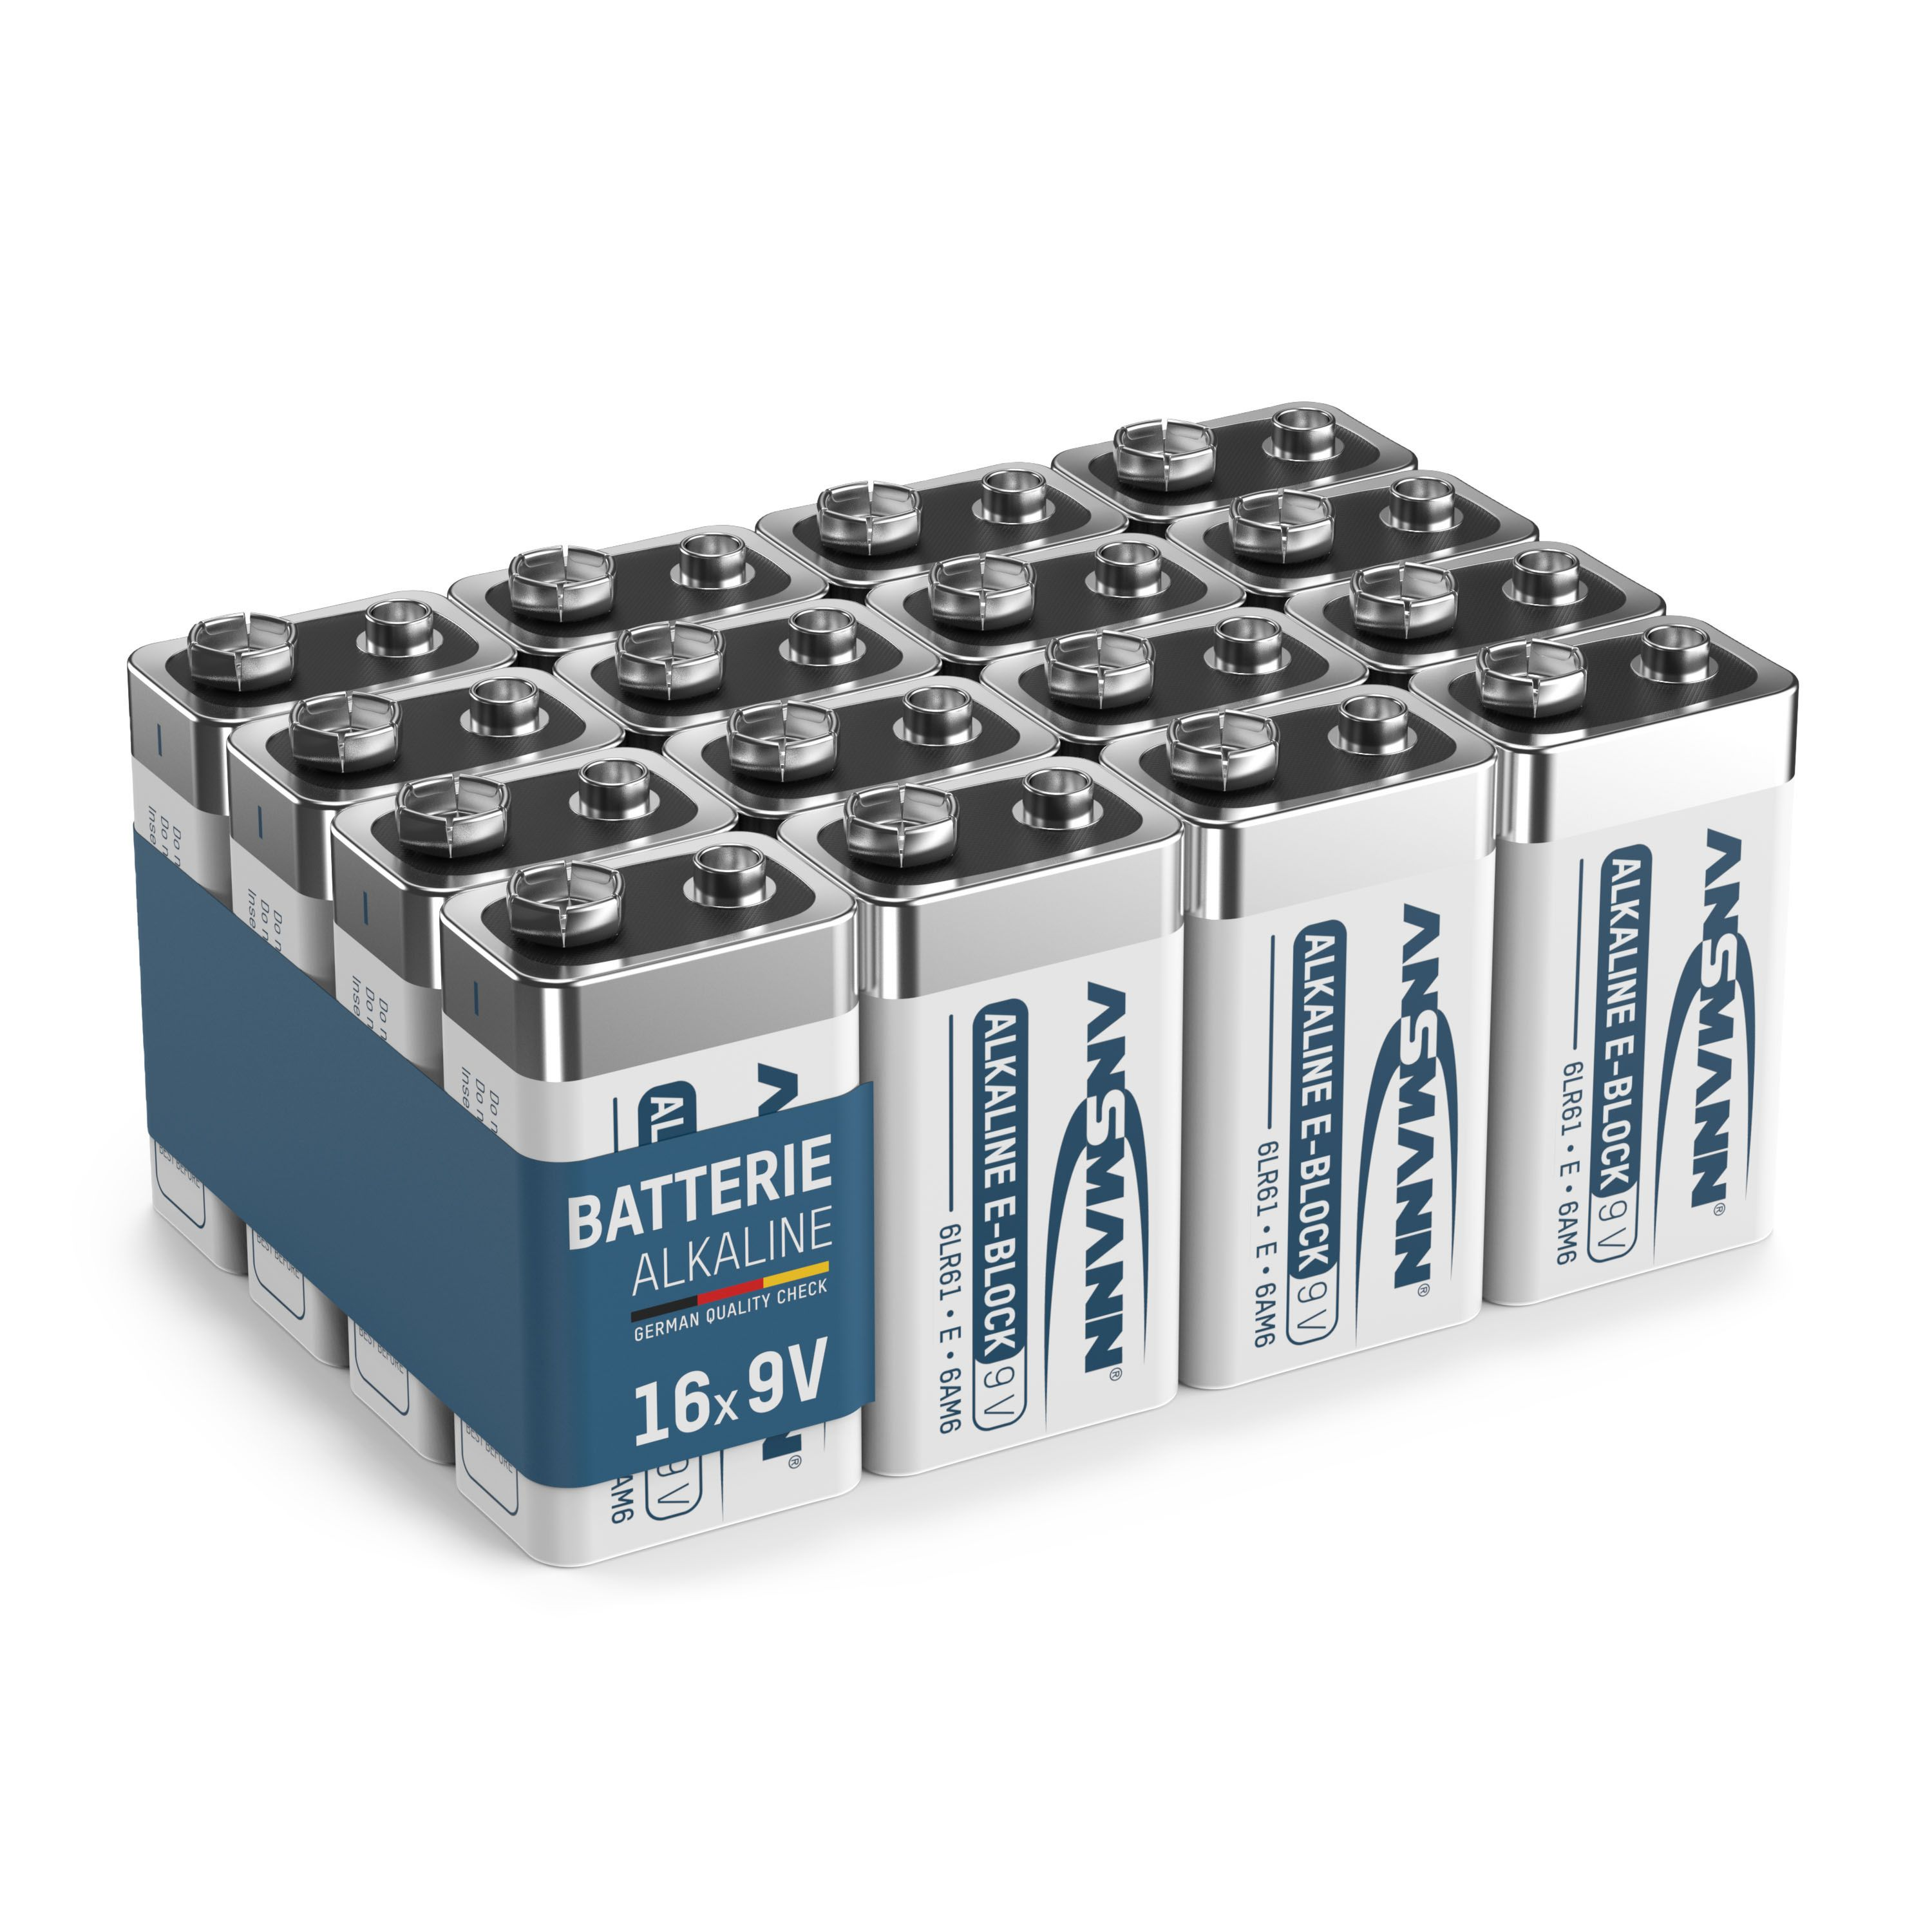 Rauchmelder, Volt Stück) 9 9V - Block für 9 Batterie, E Block Volt 9V Batterie, Alkaline ANSMANN ideal Alarmanlagen, (16 longlife Brandmelder Alkaline